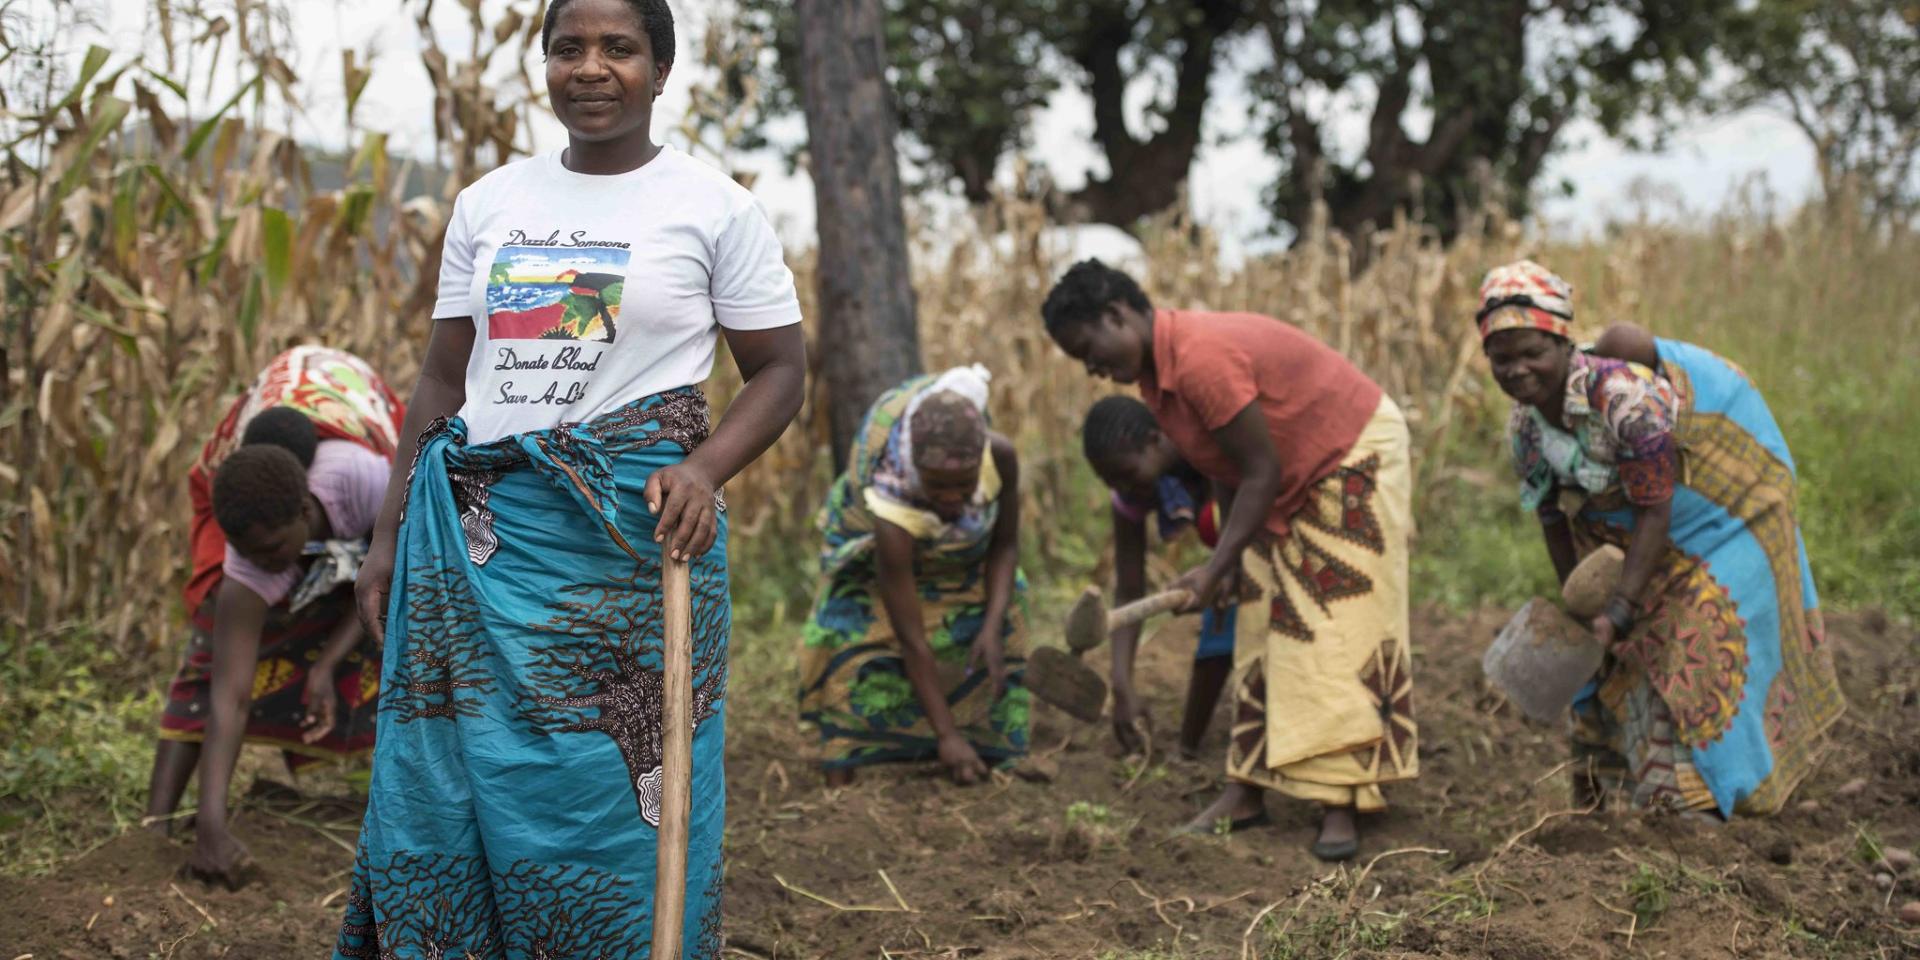 Investing In Rural Women Farmers Narrows The Gender Gap In Agriculture Cgiar Gender Impact